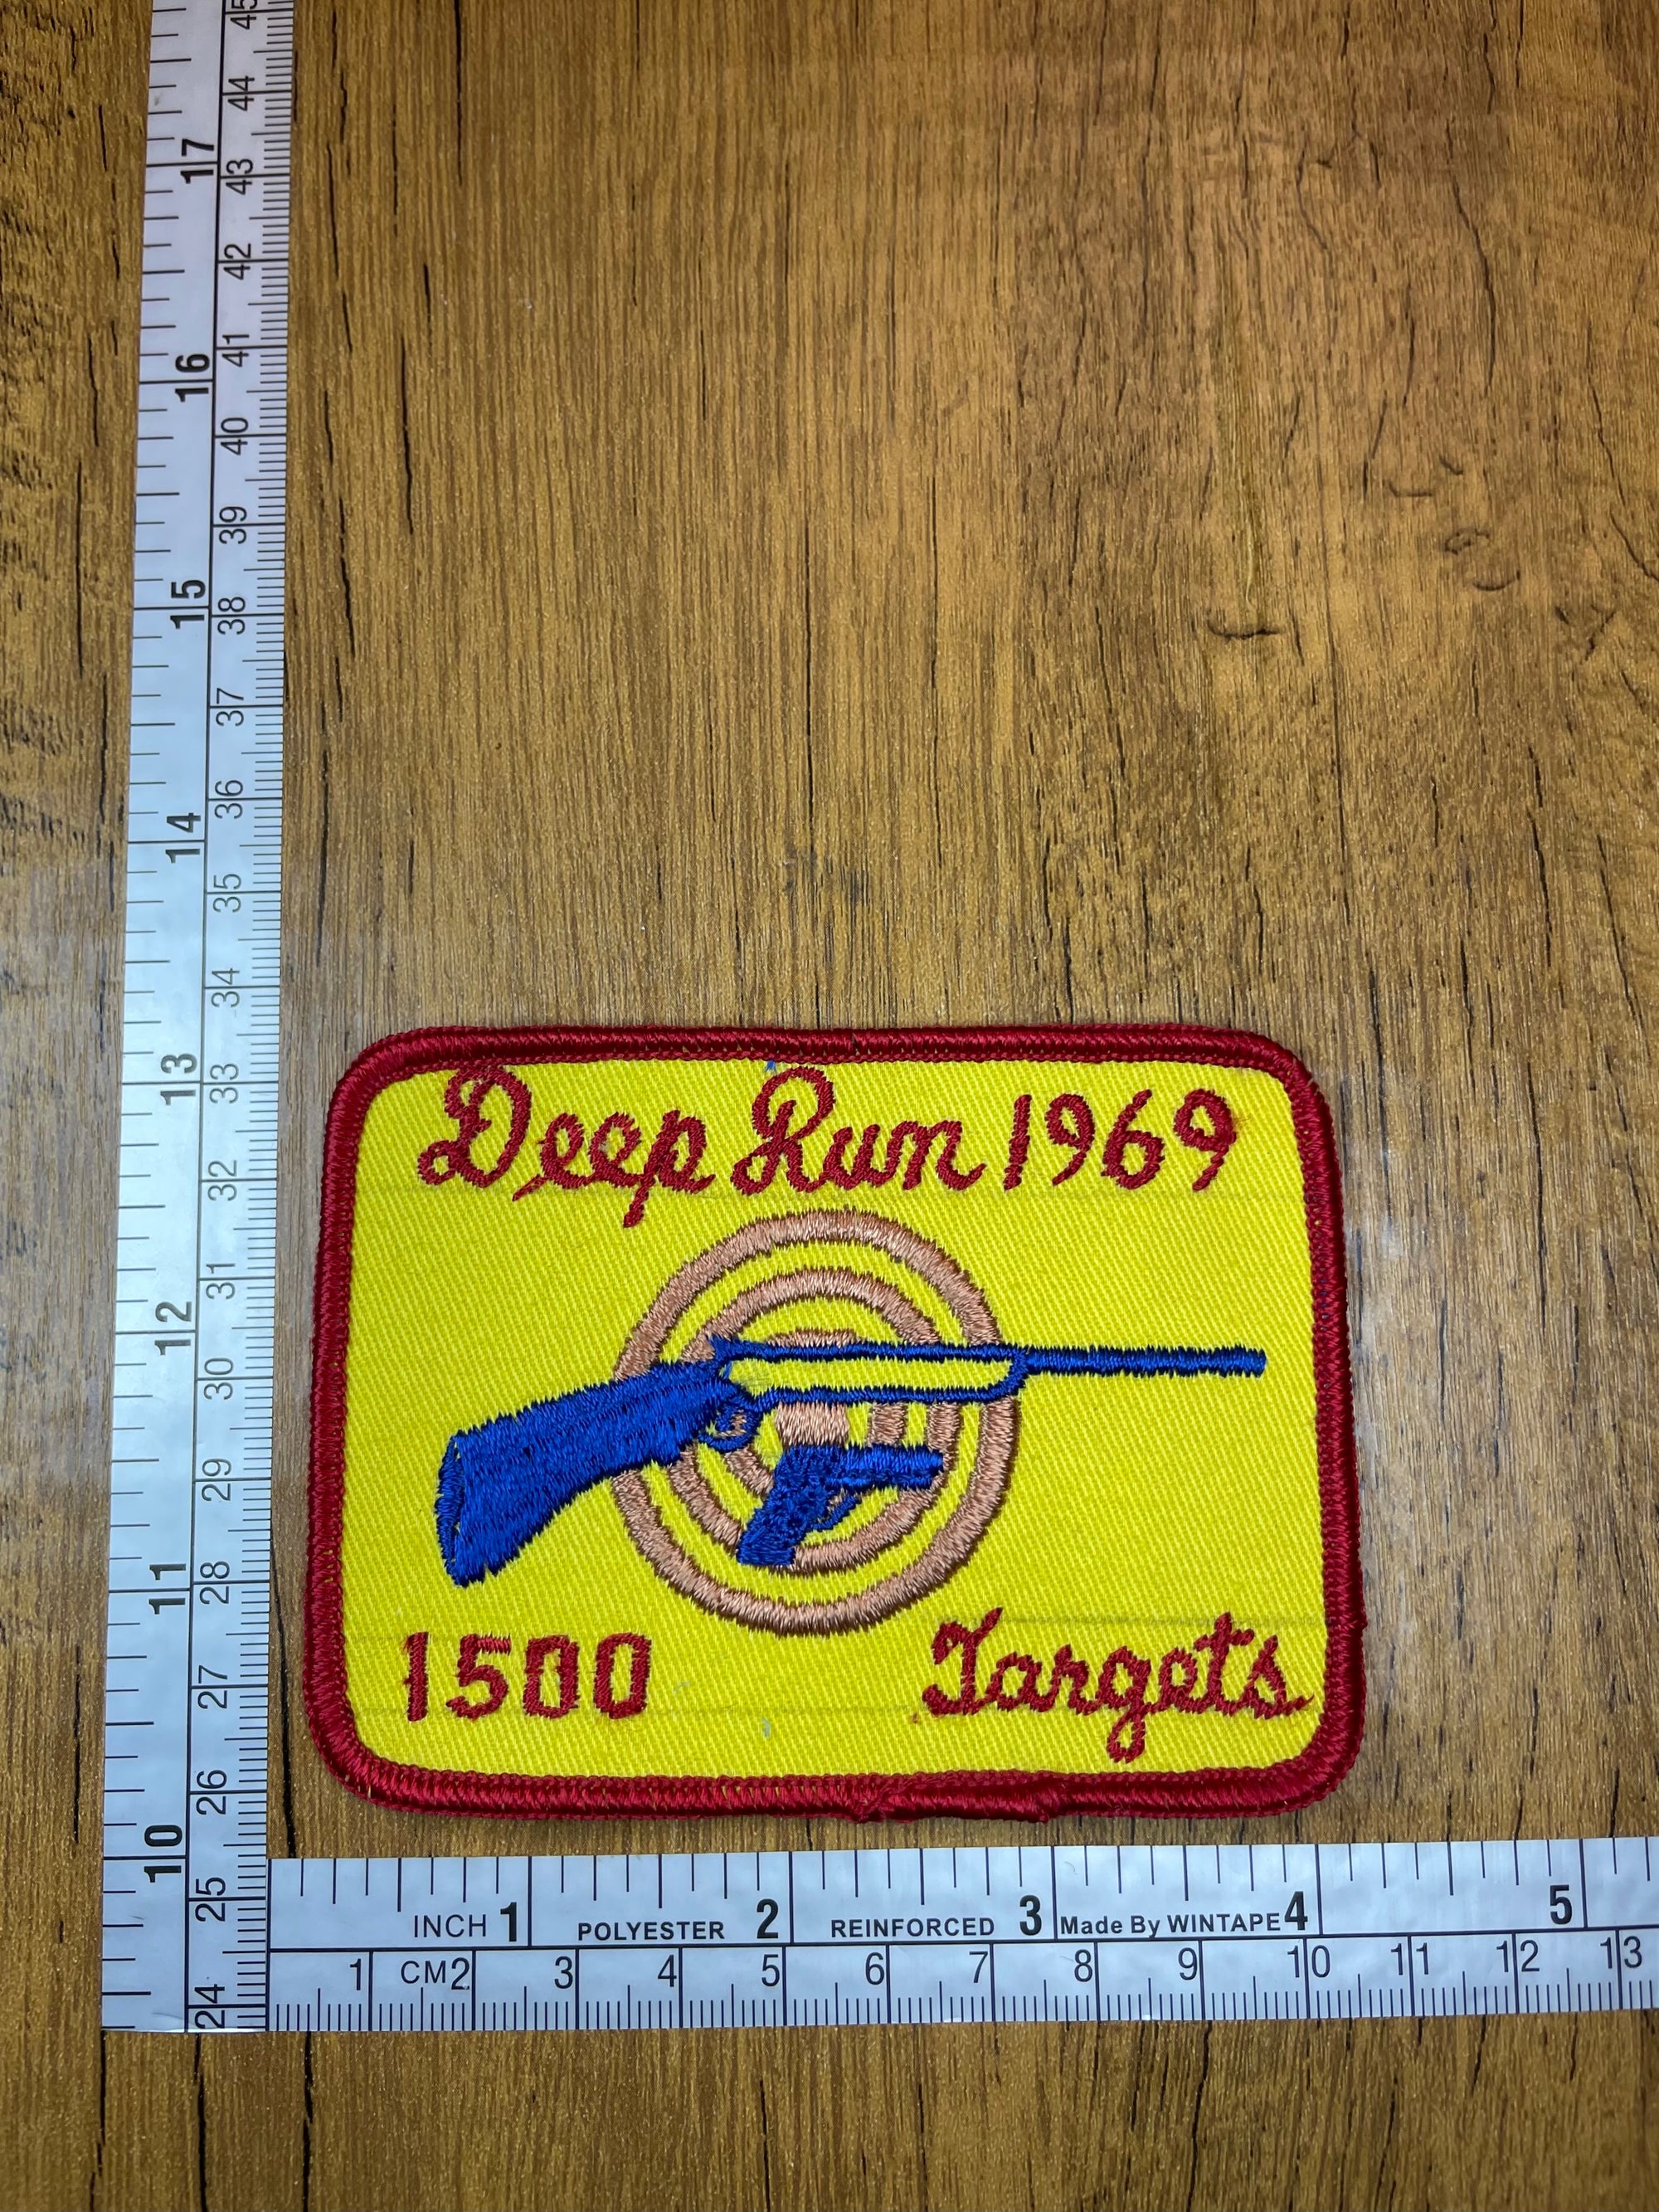 Vintage Deep Run 1969- 1500 Targets, Guns, Amo, Shooting, Glocks